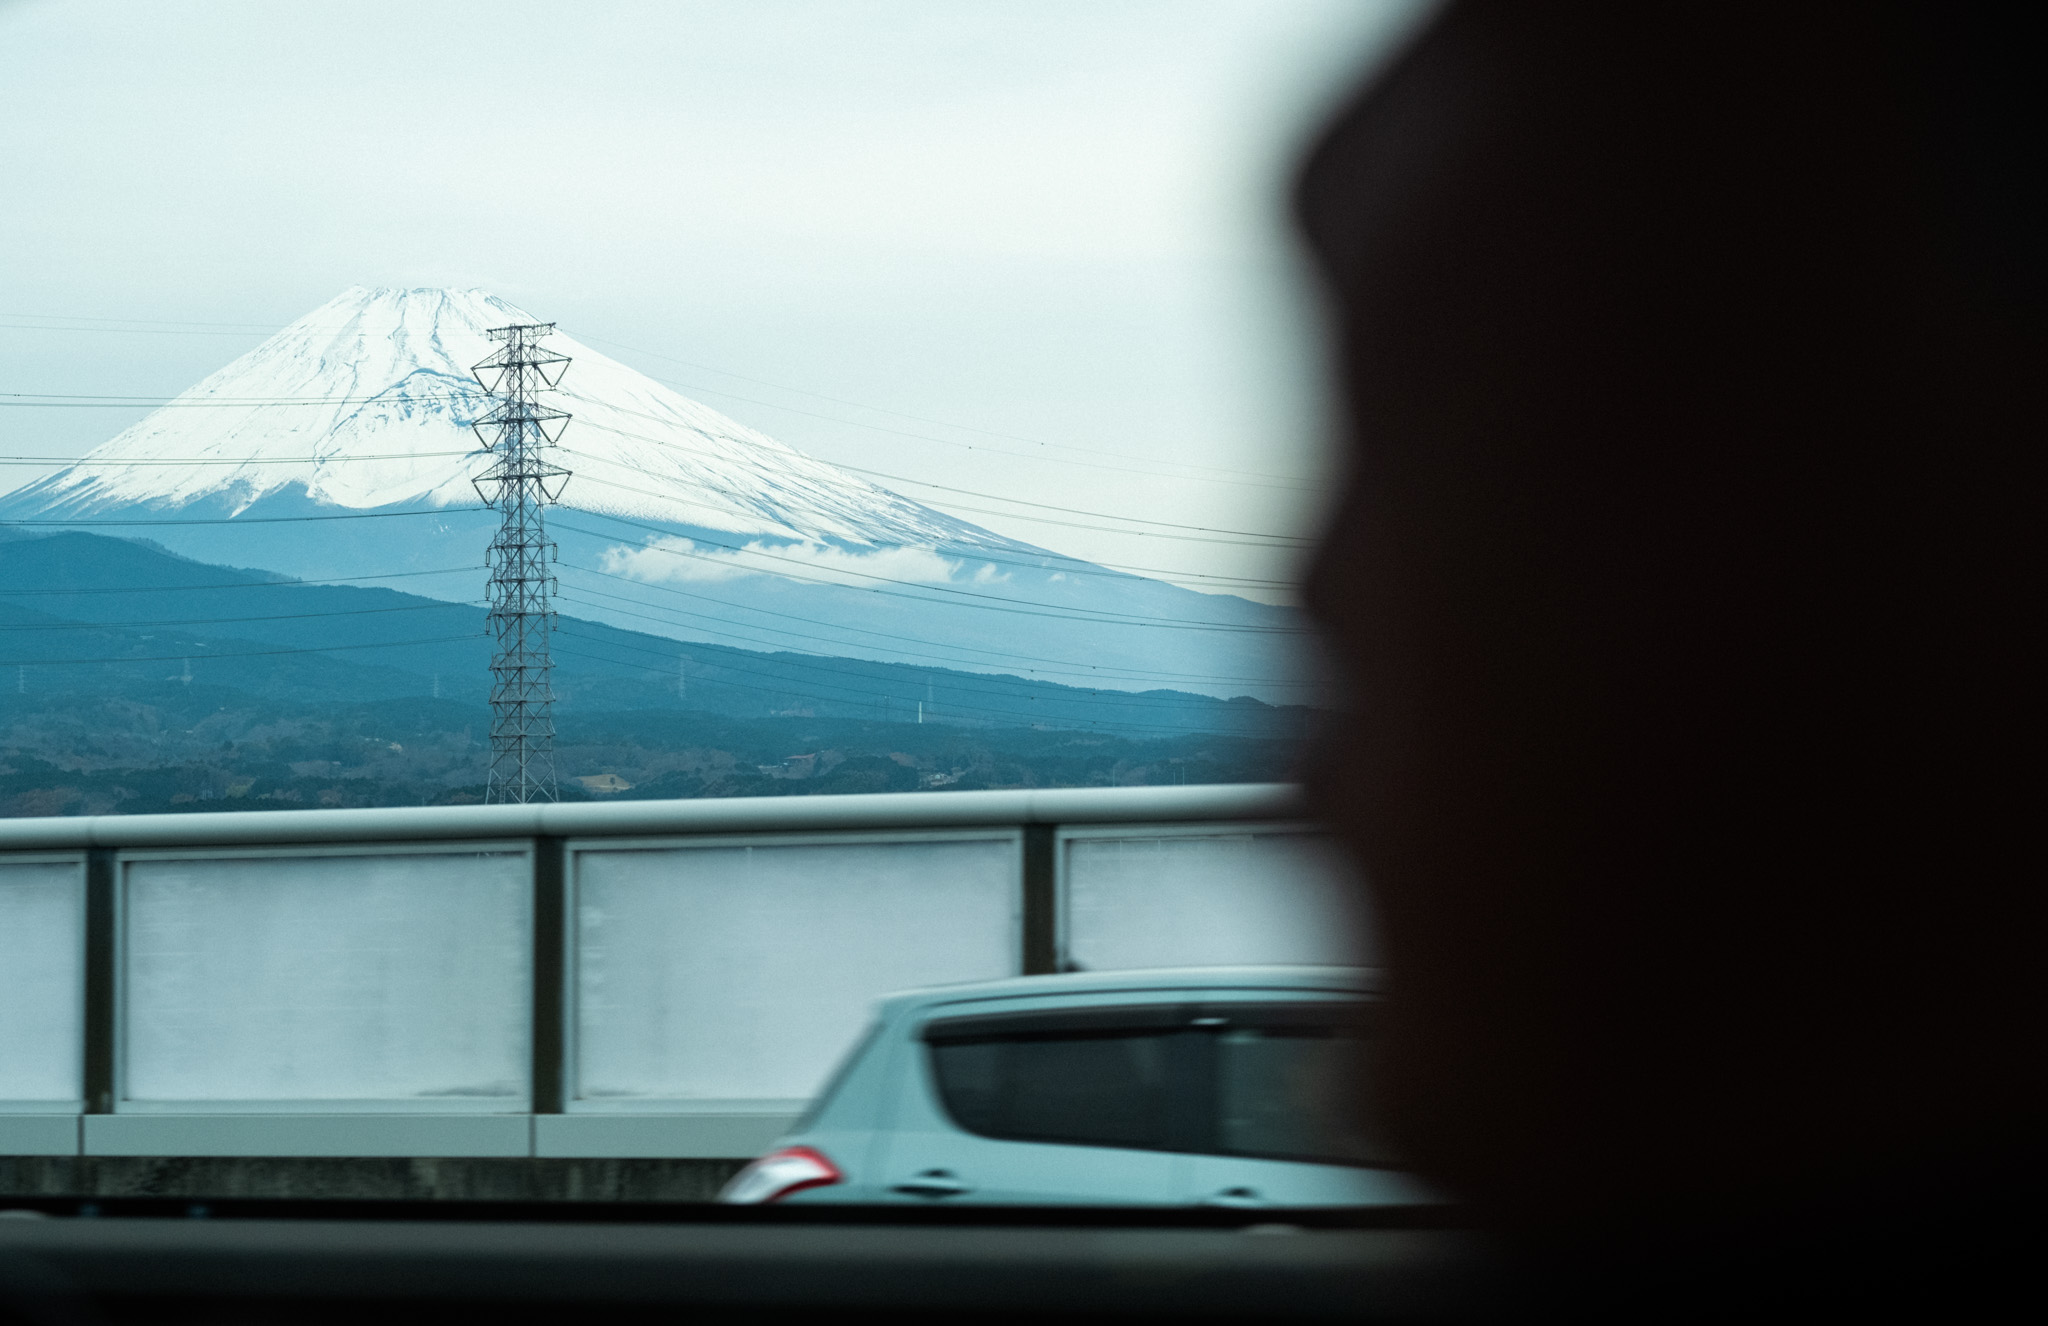 Mt. Fuji in the Distance